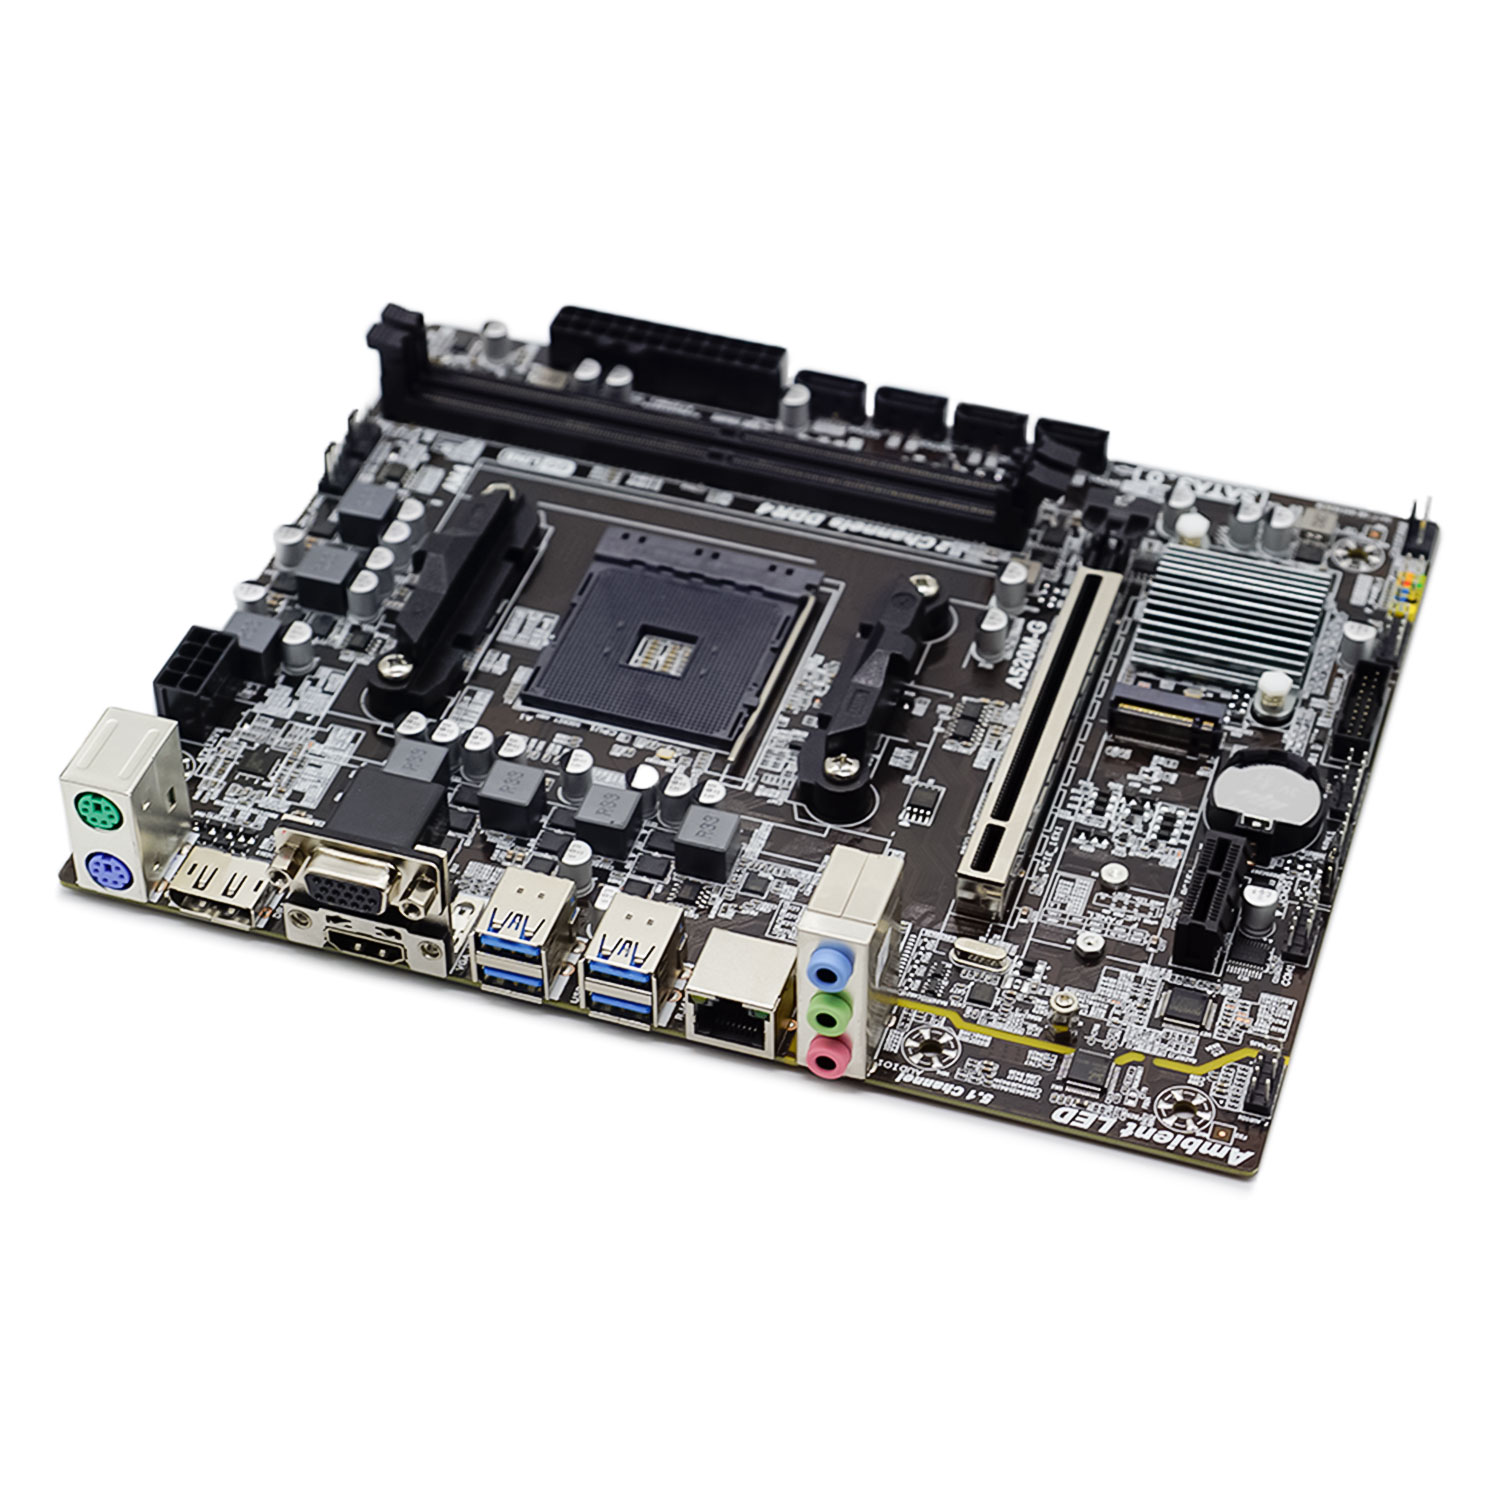 Placa Mãe Goline A520M-G DDR4 Socket AM4 Chipset AMD A520 Micro ATX (1 Ano de Garantia)
